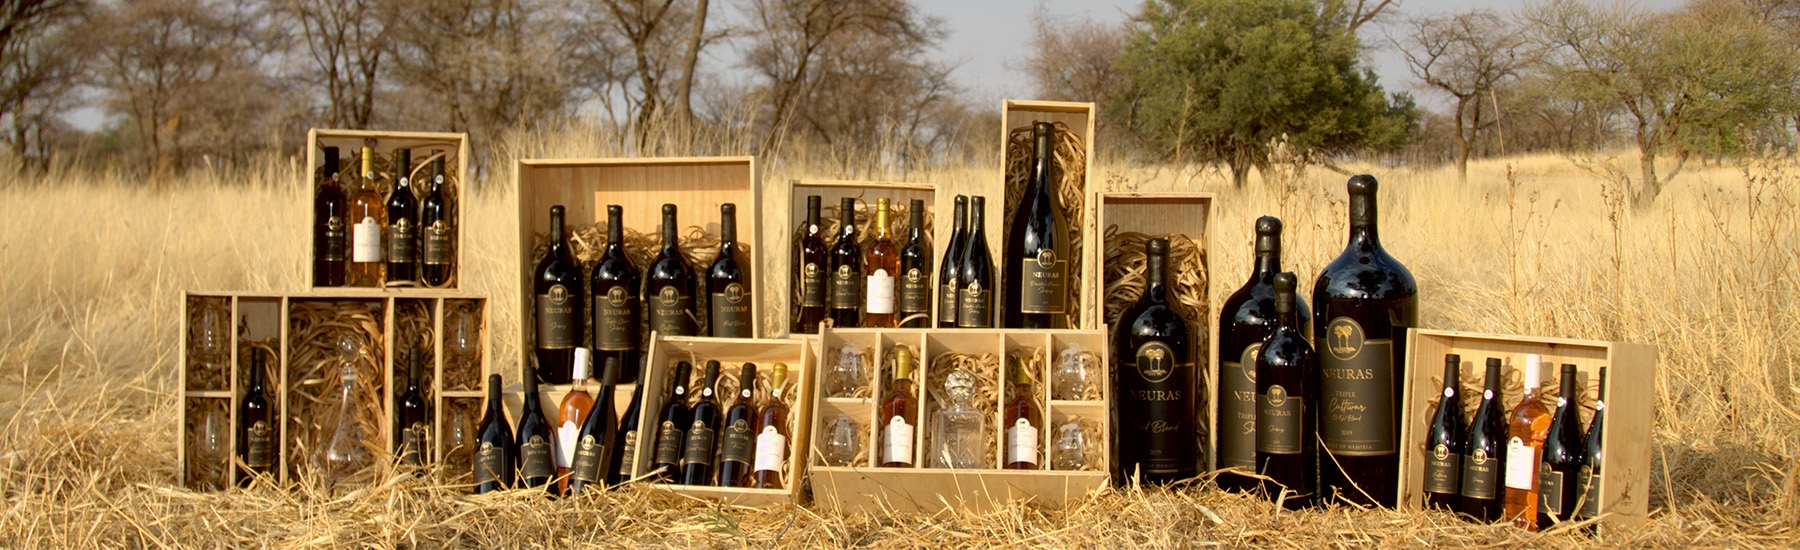 Neuras Wine Collection 